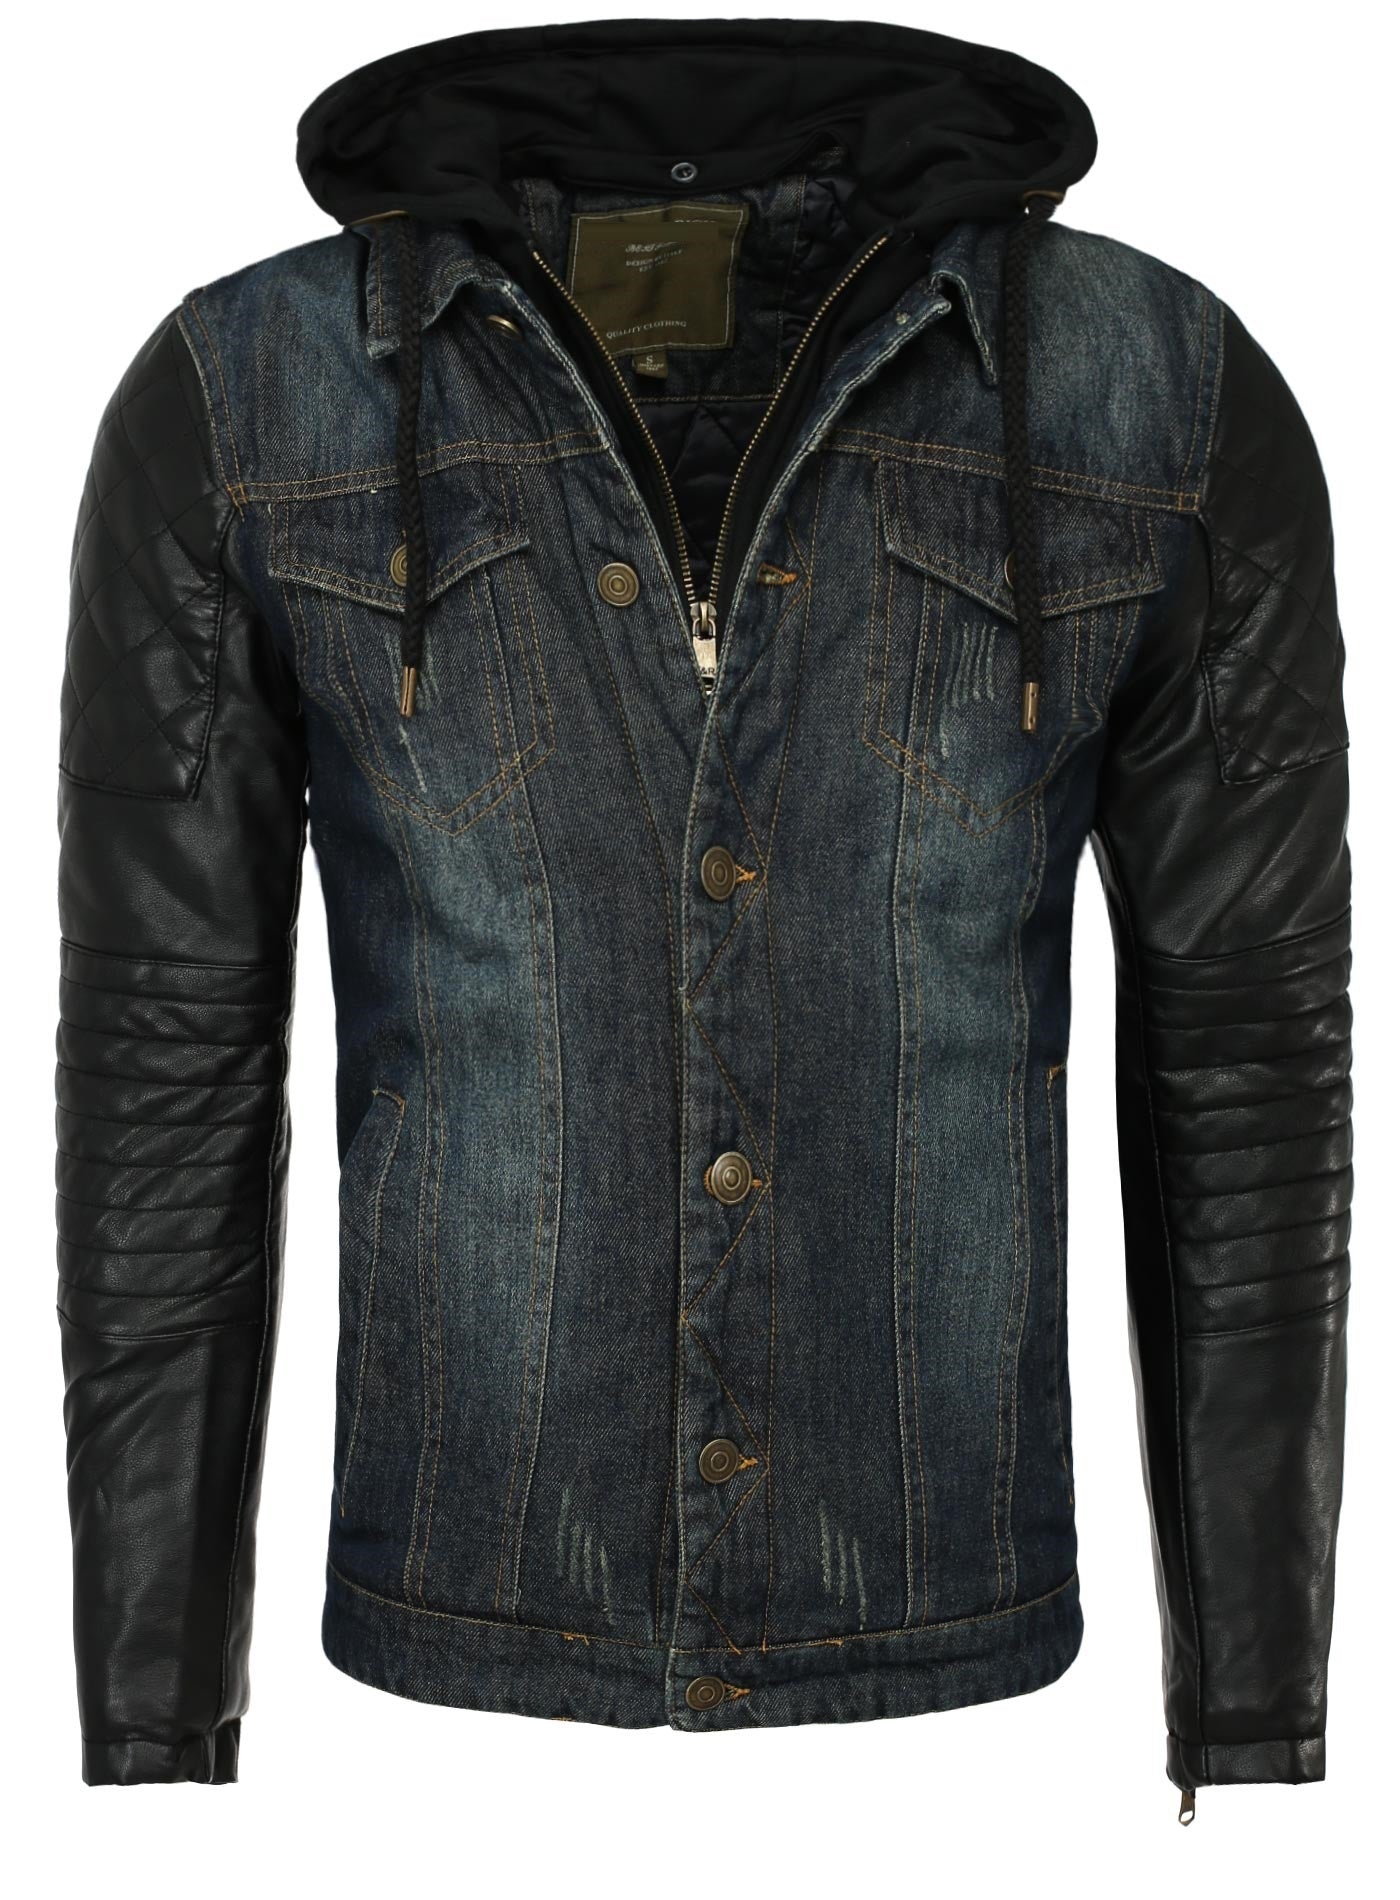 black denim jacket with leather sleeves